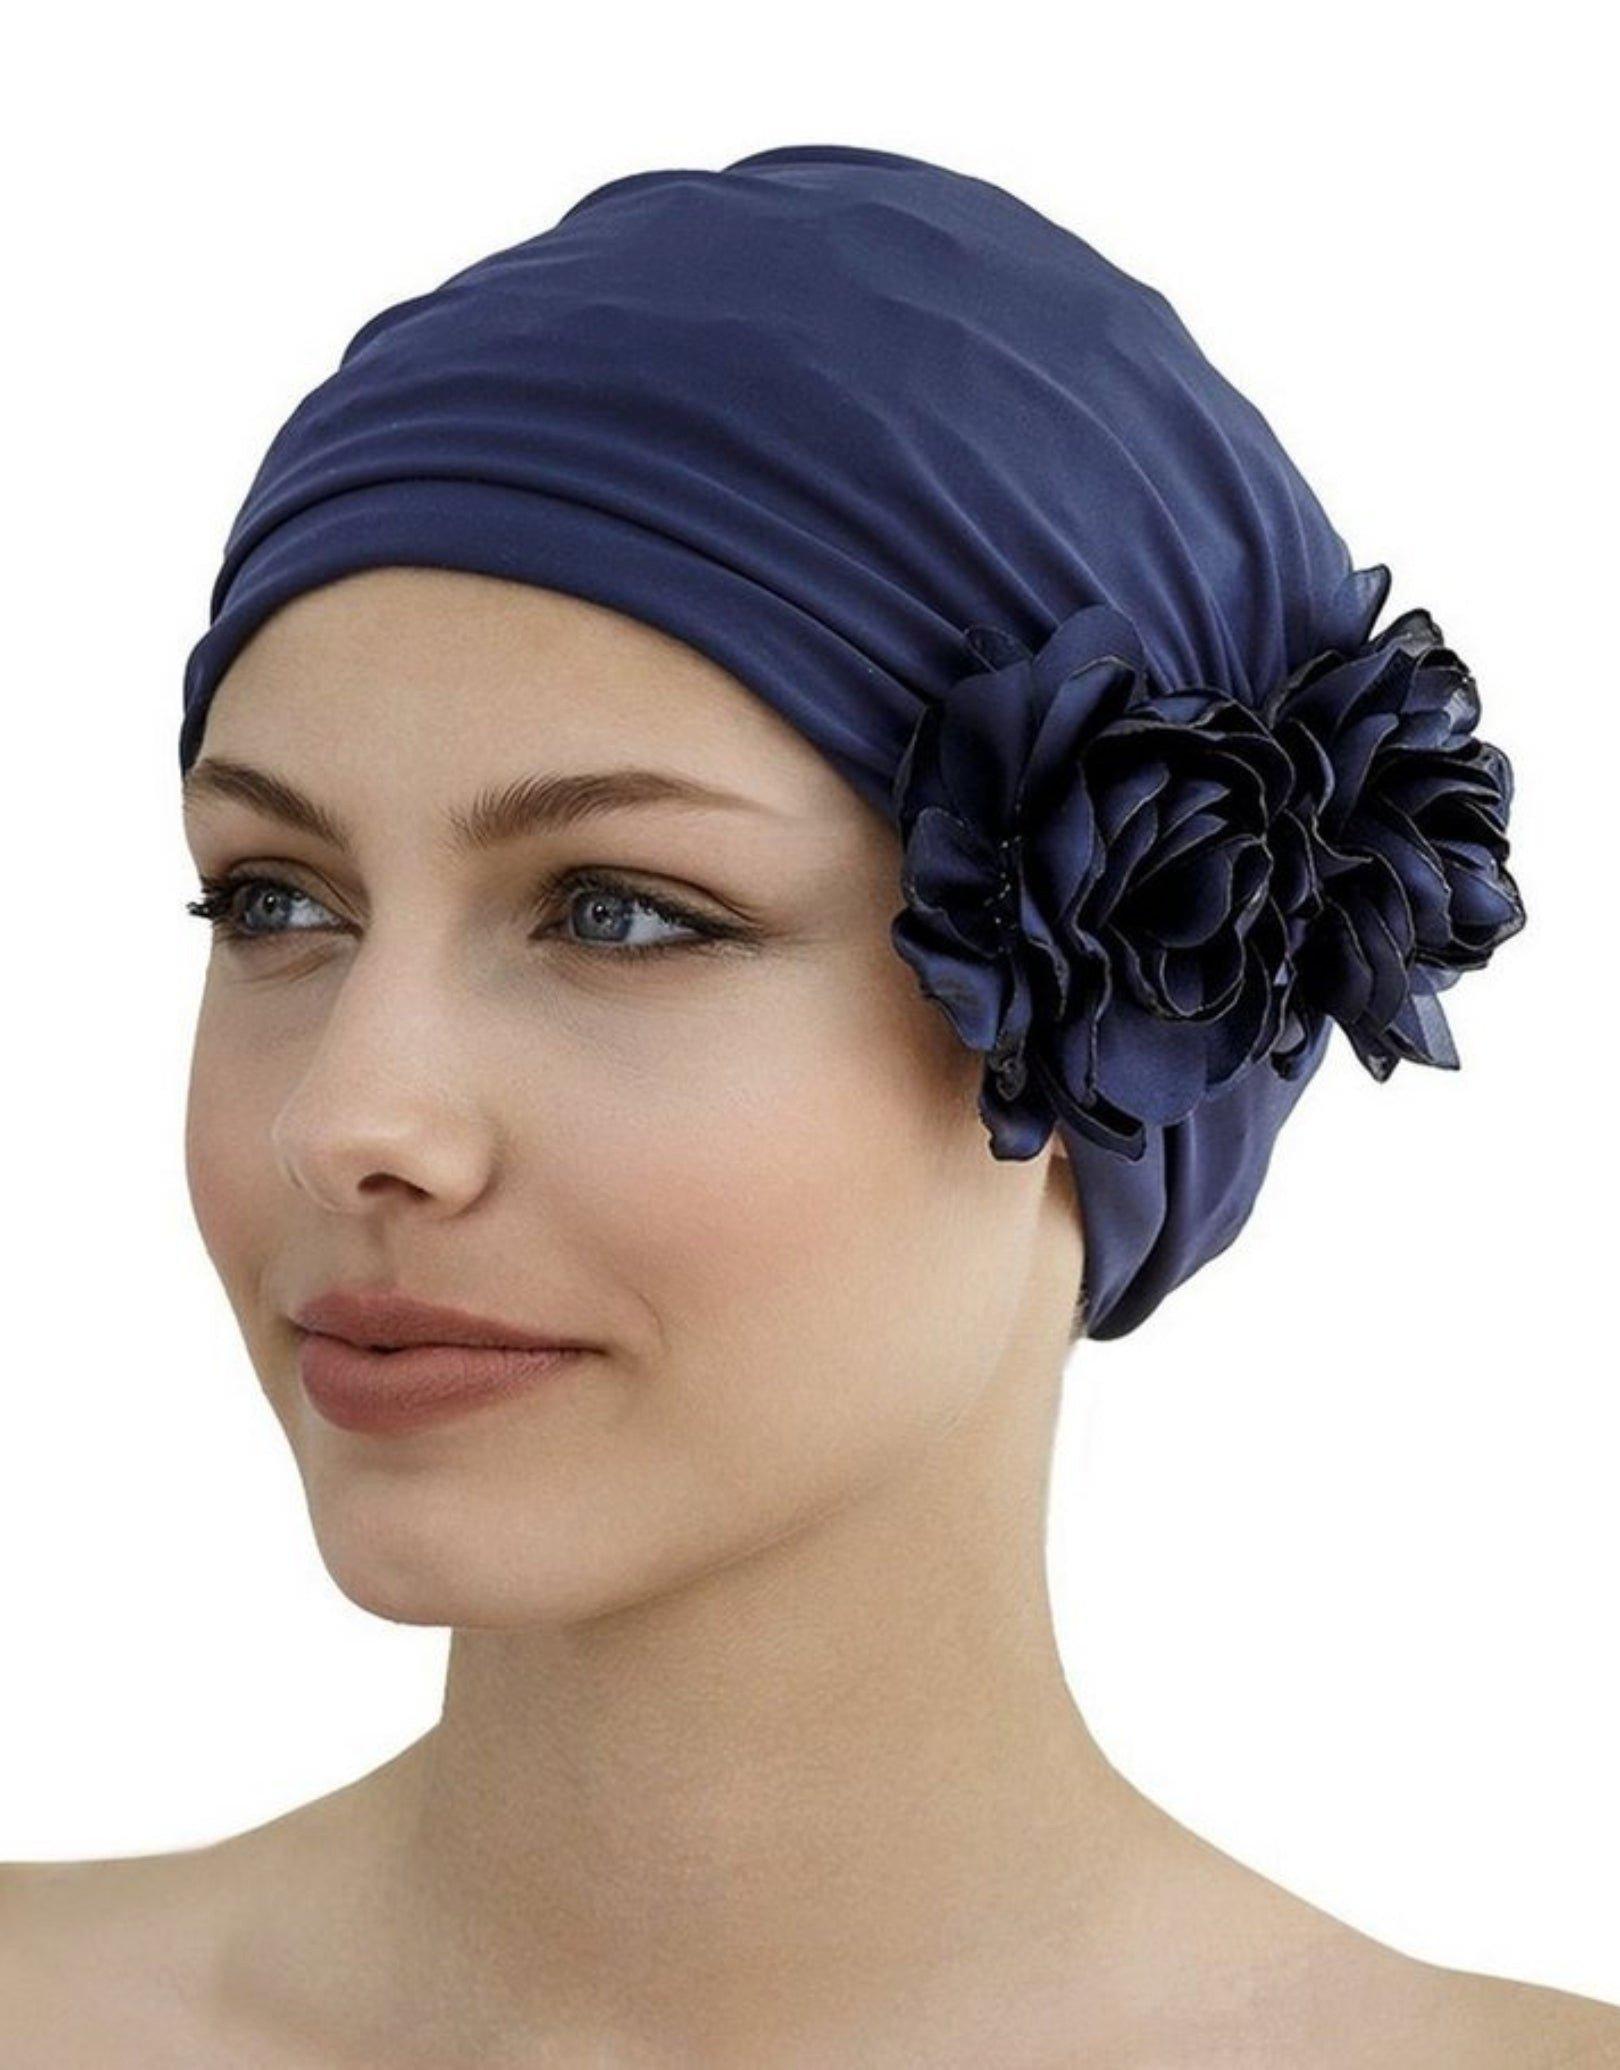 Шапочка Для Плавания Из Ткани Цветок - Темно-синий Fashy, синий шапочка для плавания joss фиолетовый